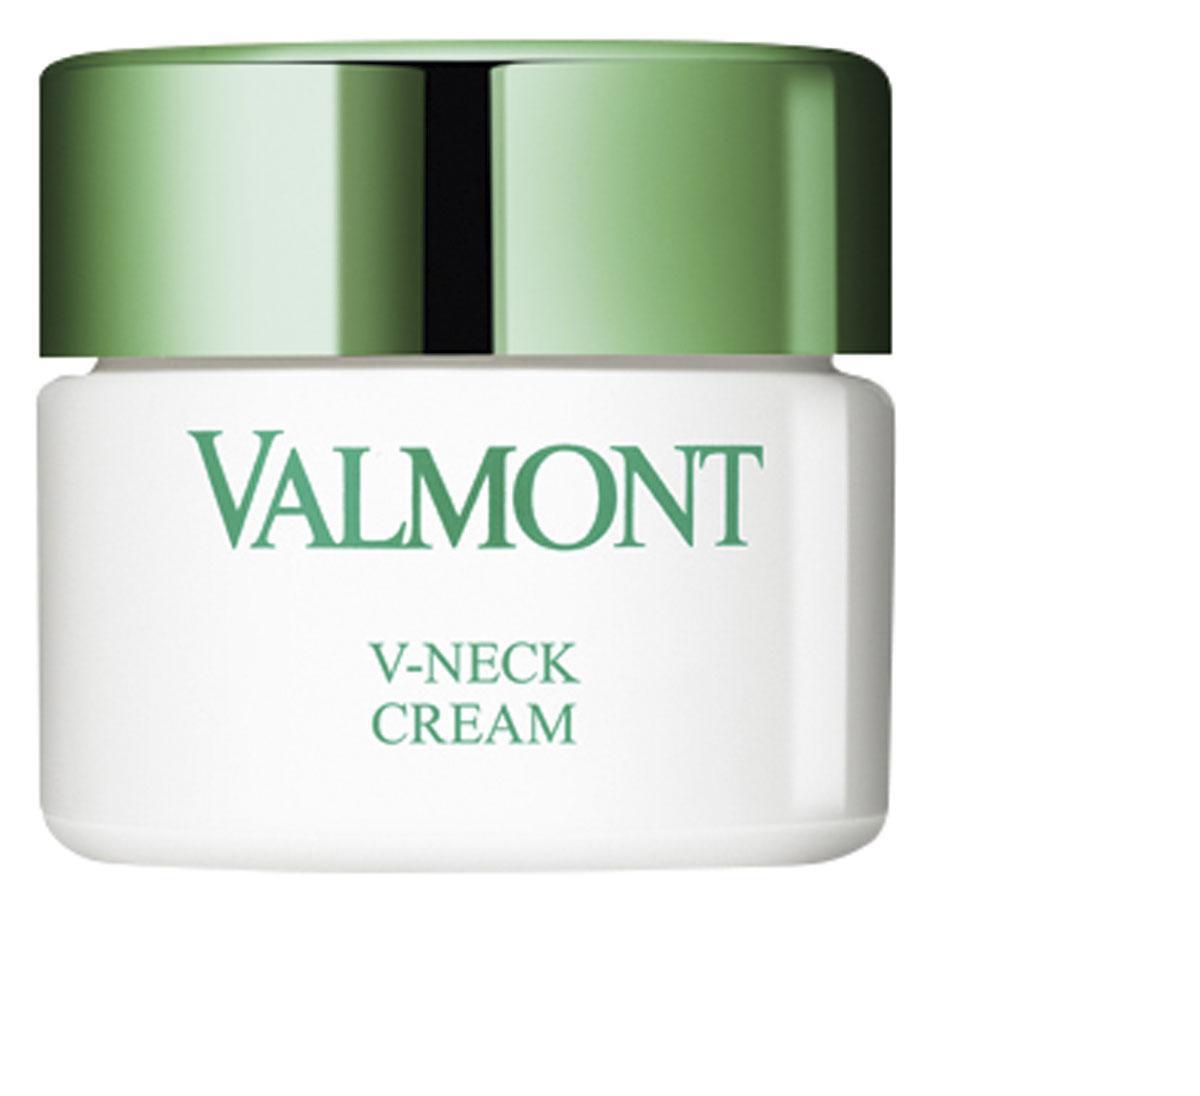 V-Neck Cream AWF5, Valmont, 274 euro voor 50 ml.